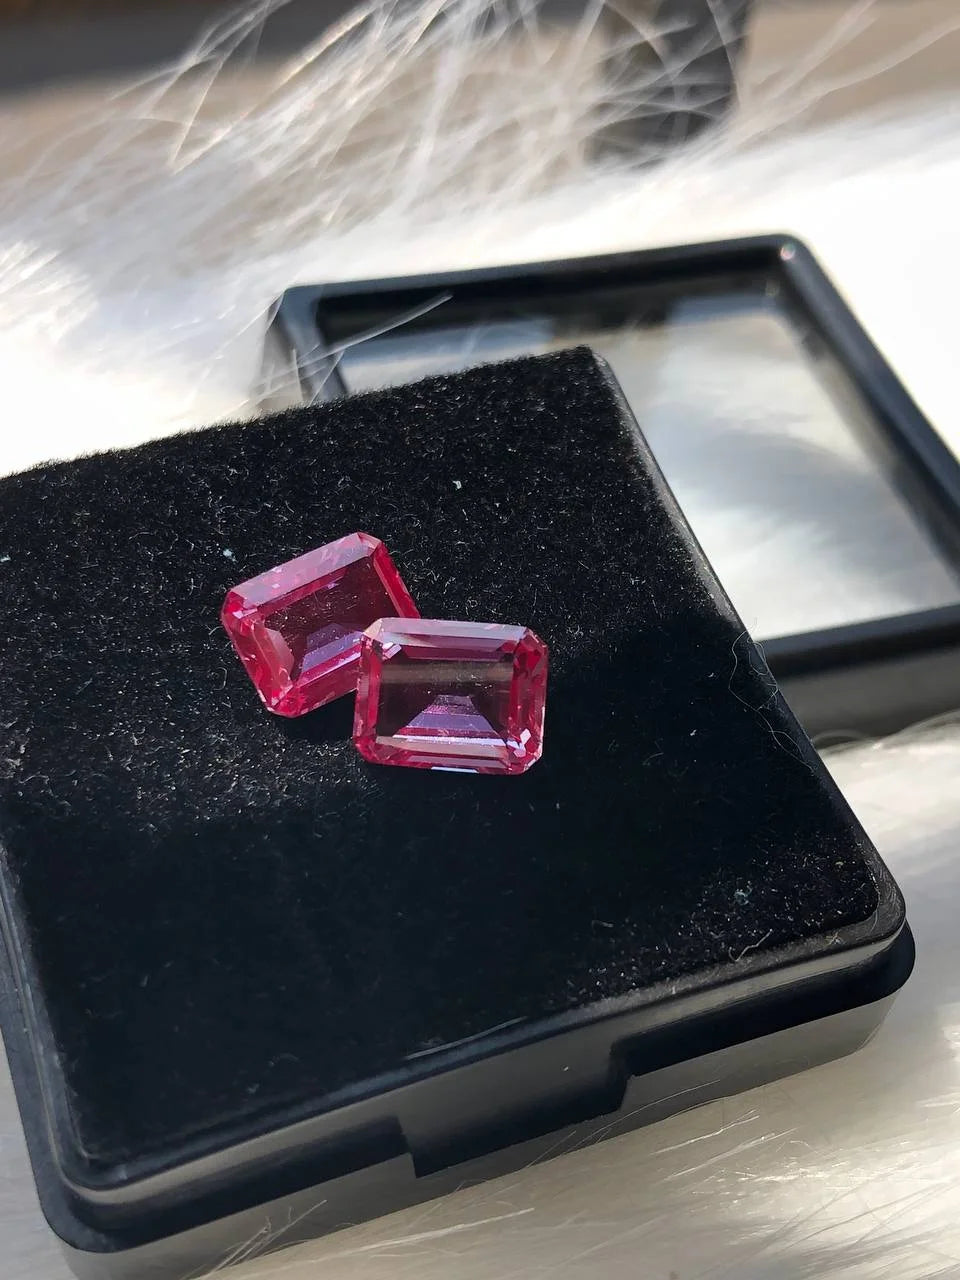 Eemrald Cut Pink Alexandrite Gemstone